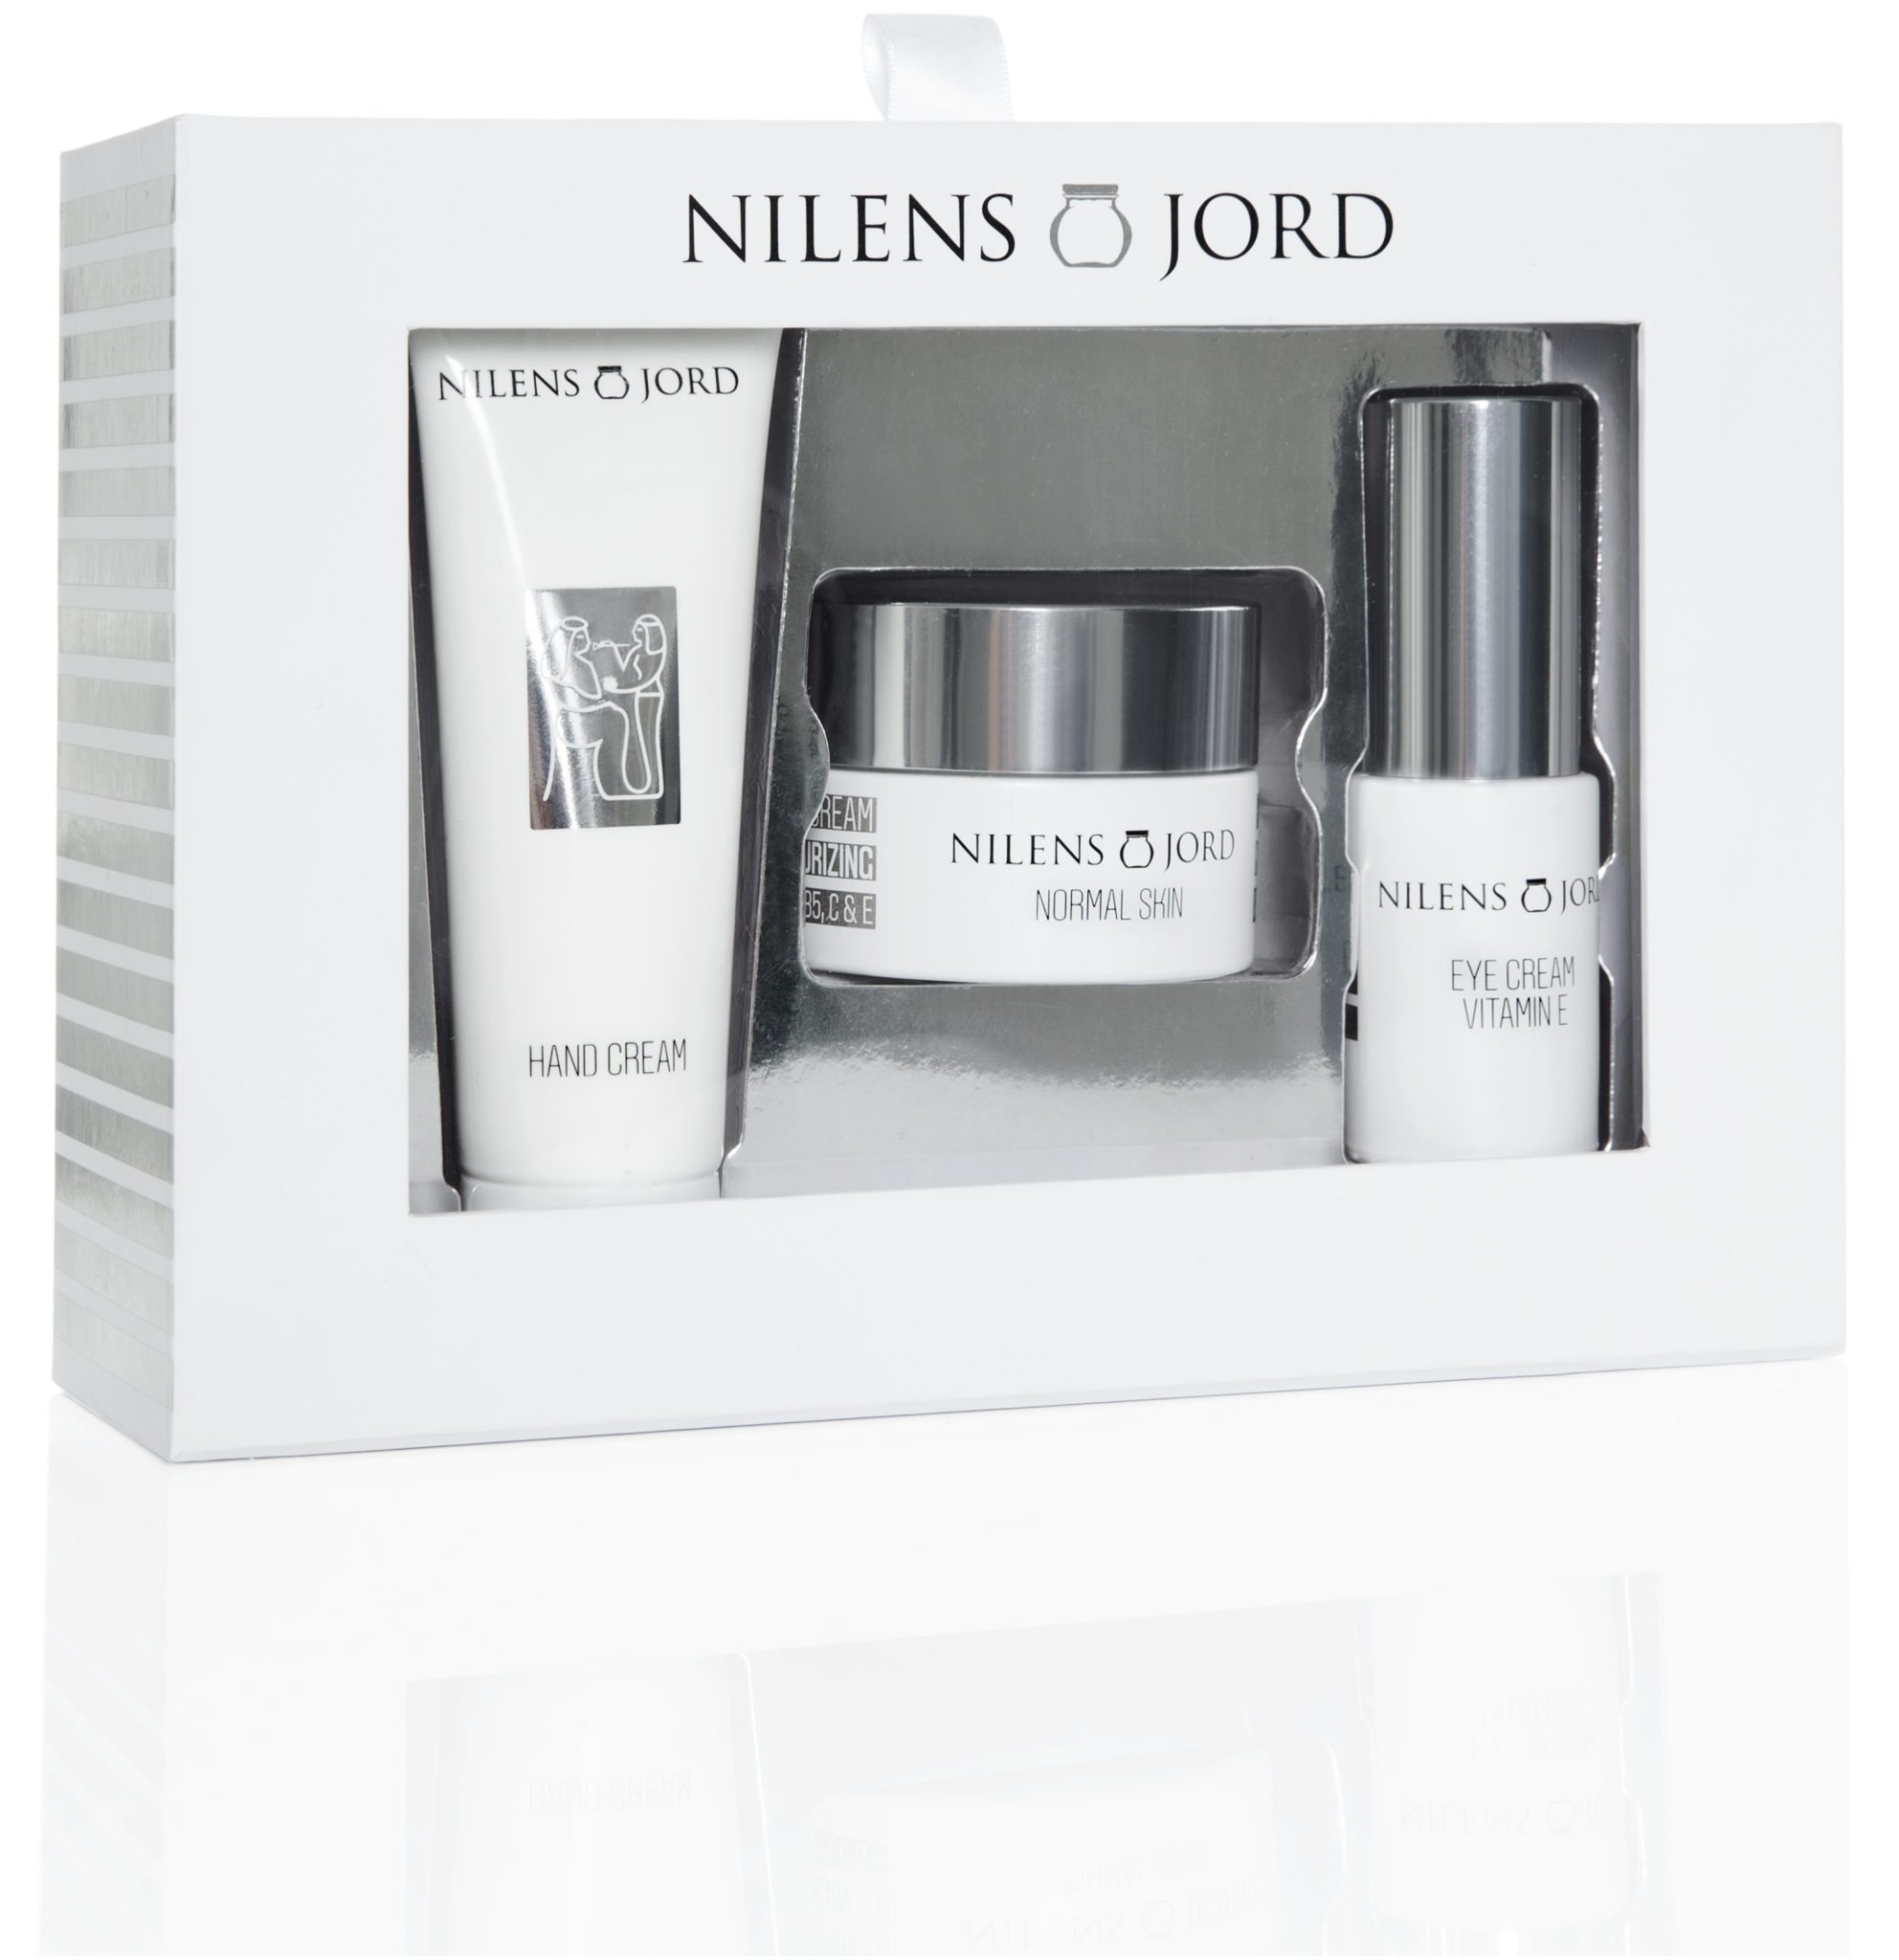 Nilens_jord_Limited_Edition_Gift_Box_DKK399